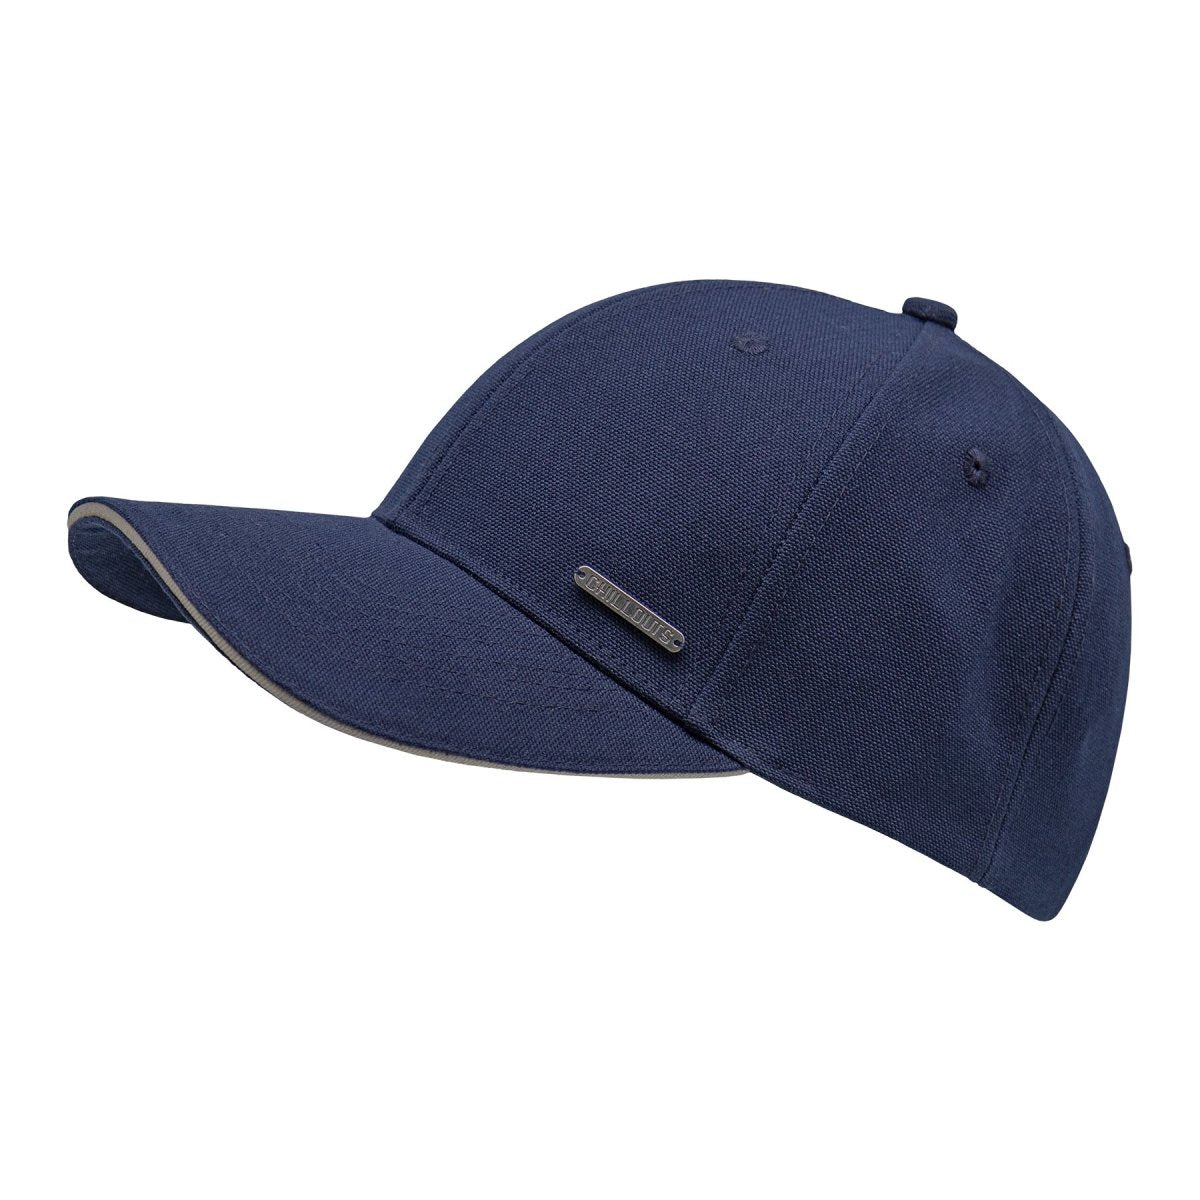 jetzt – für Chillouts nachhaltige Cap Baseball Headwear chillouts! bei - Herren Caps